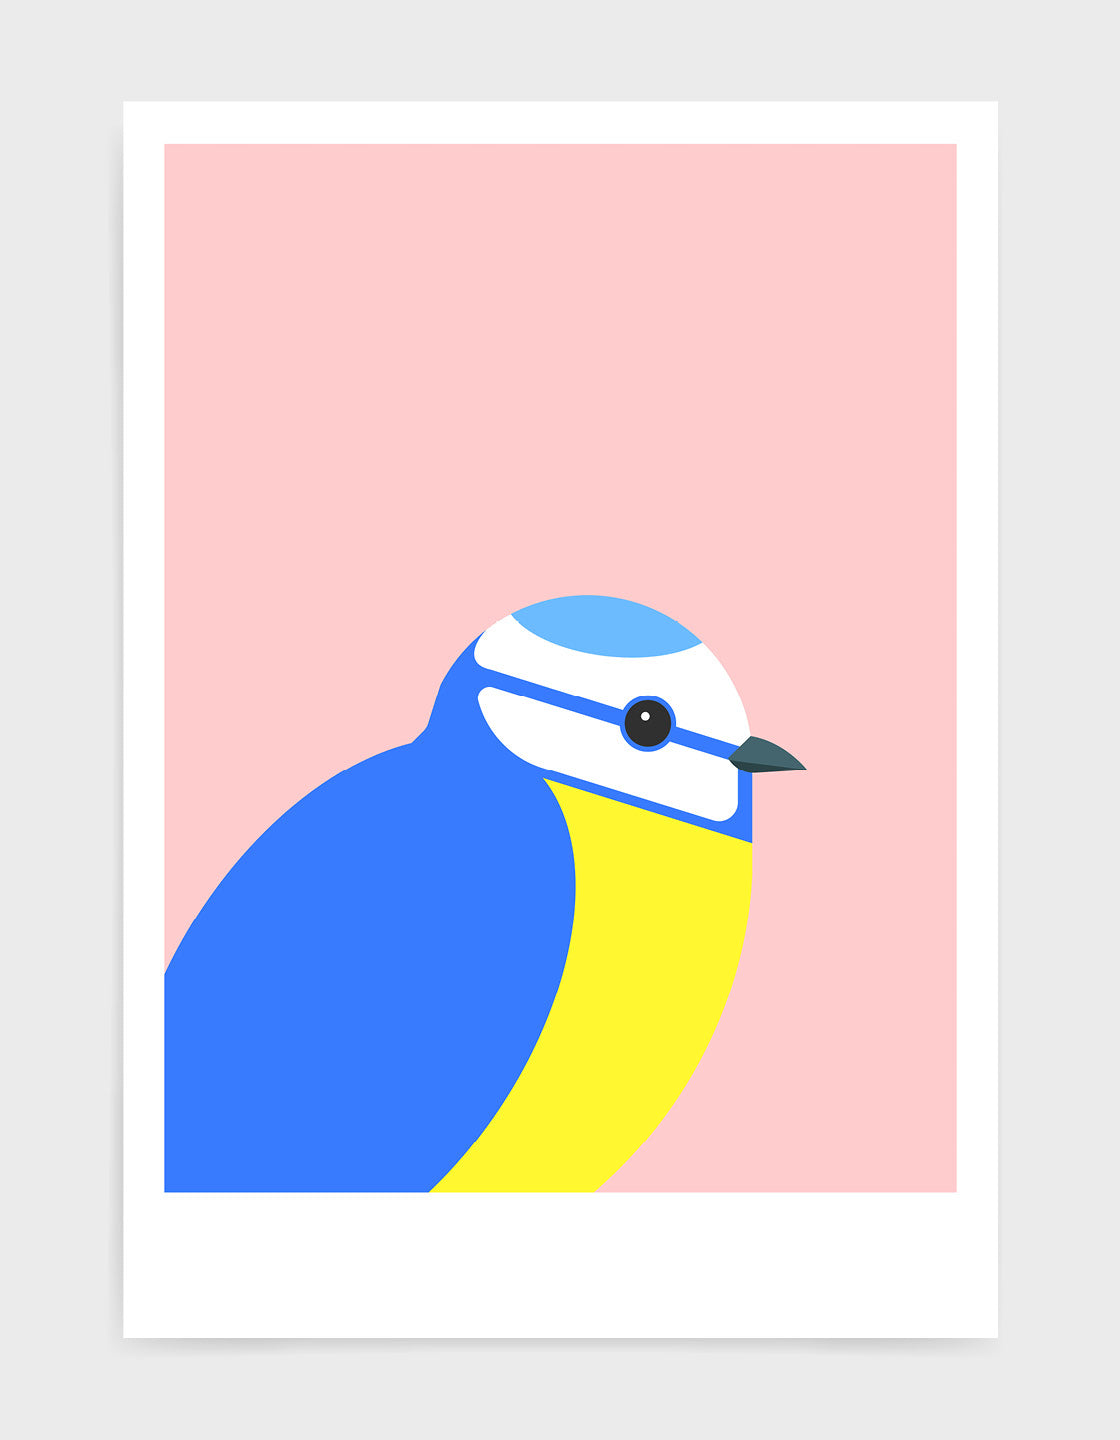 modern illustration of a blue tit bird against a pink background